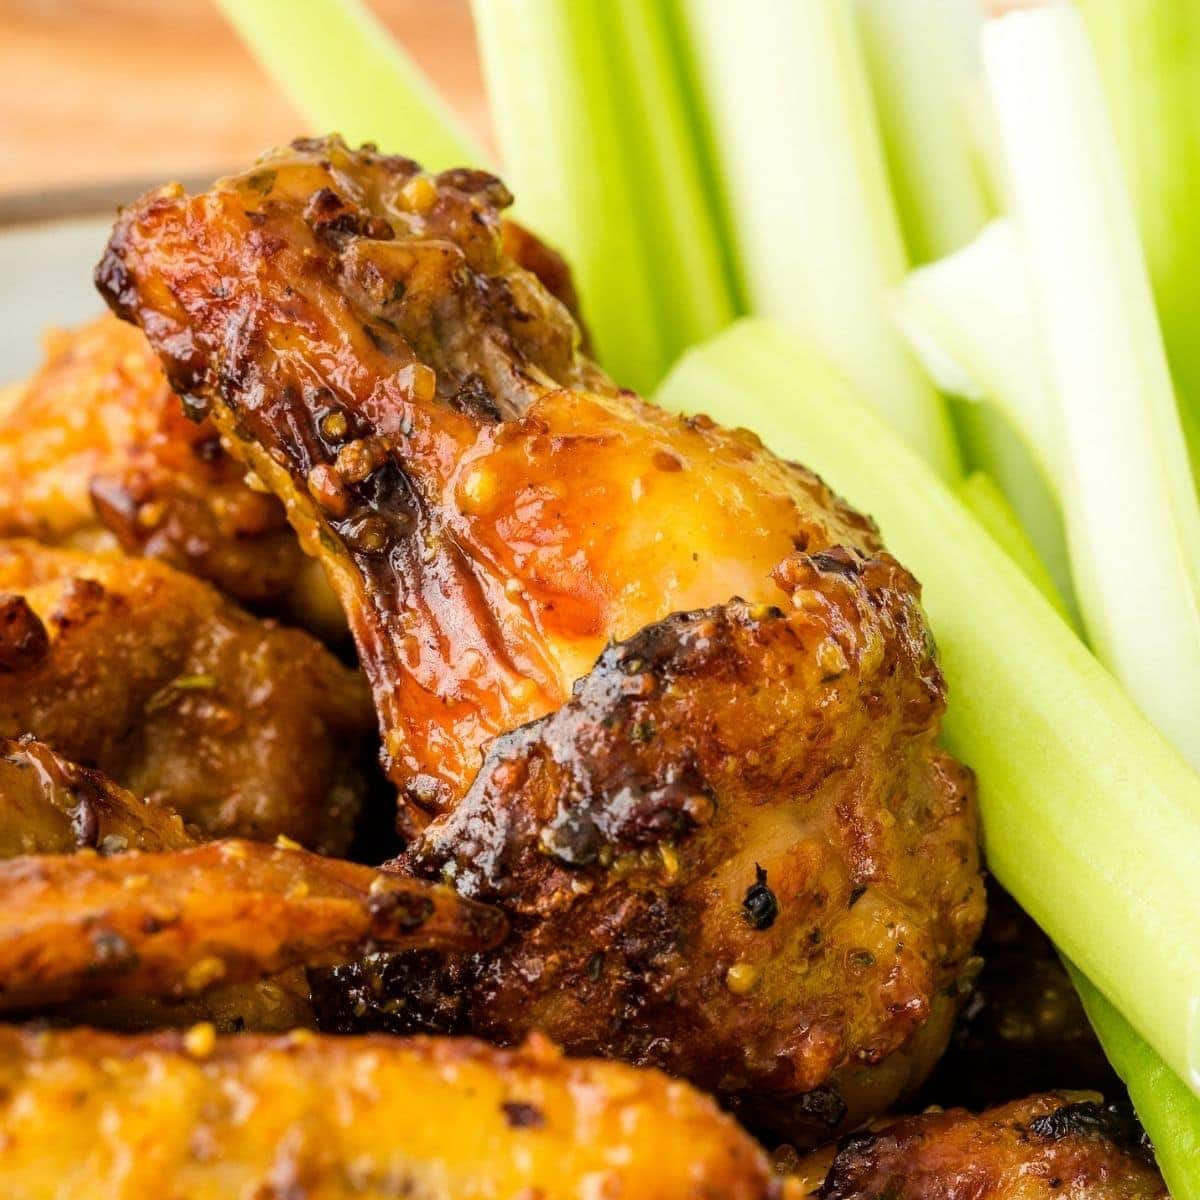 Chicken wings with honey mustard sauce served alongside celery sticks.